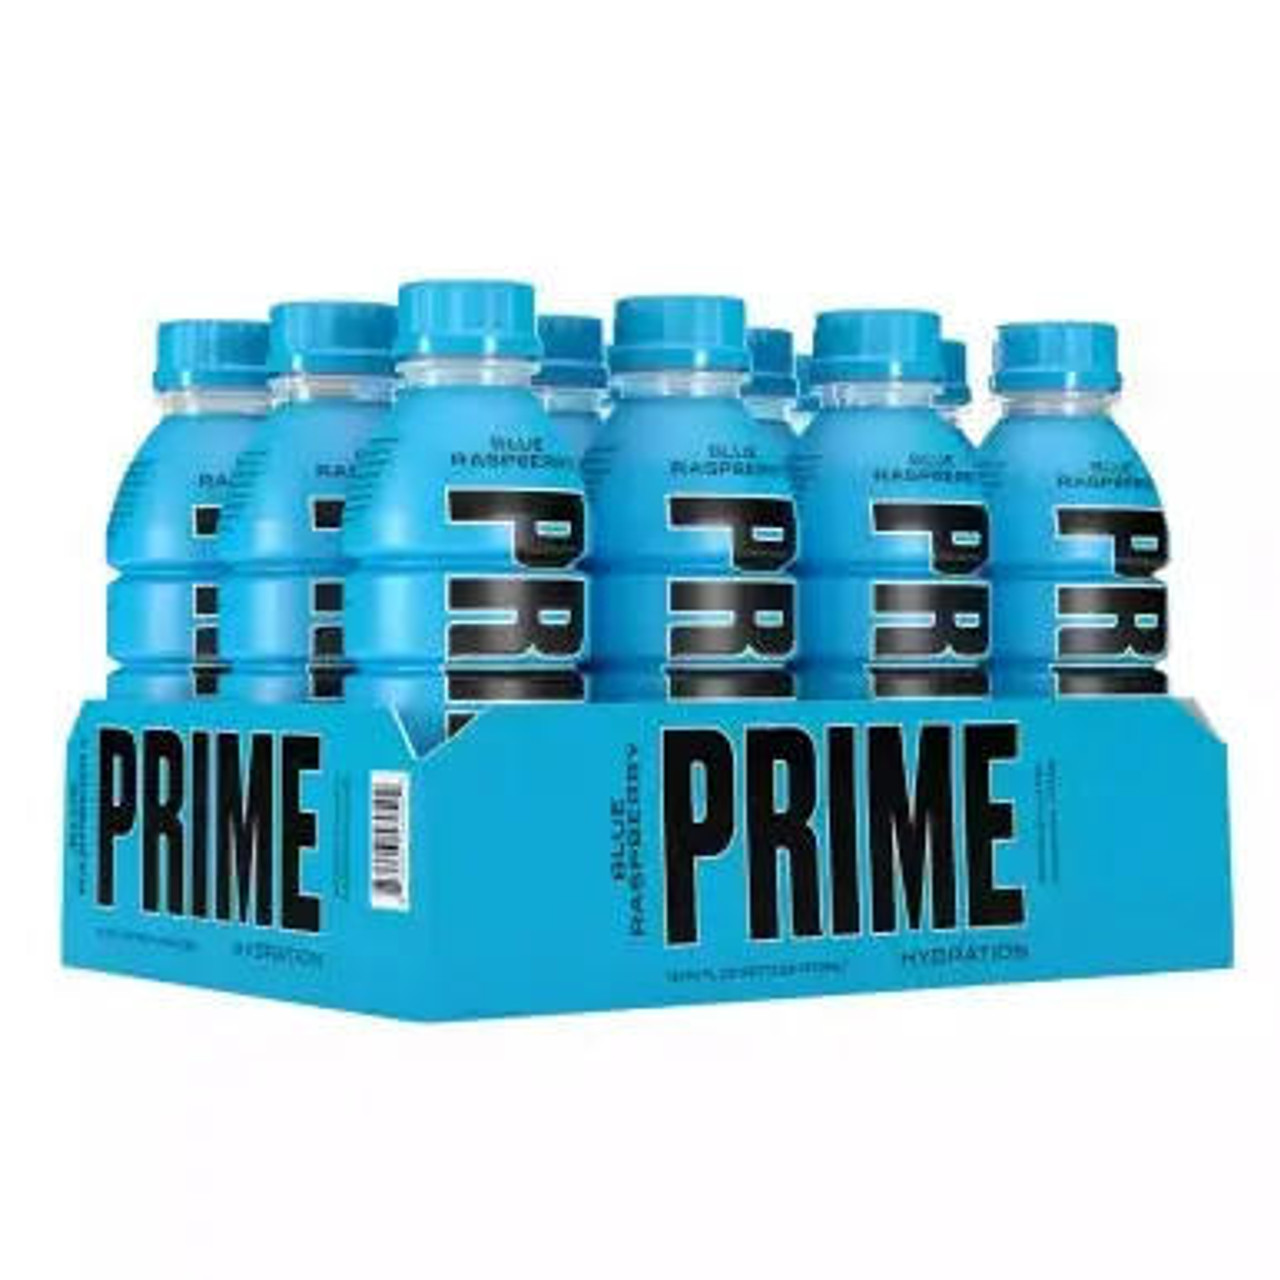 Prime Hydration Drink Sports Beverage Lemon lime, Naturally Flavored  12-pk